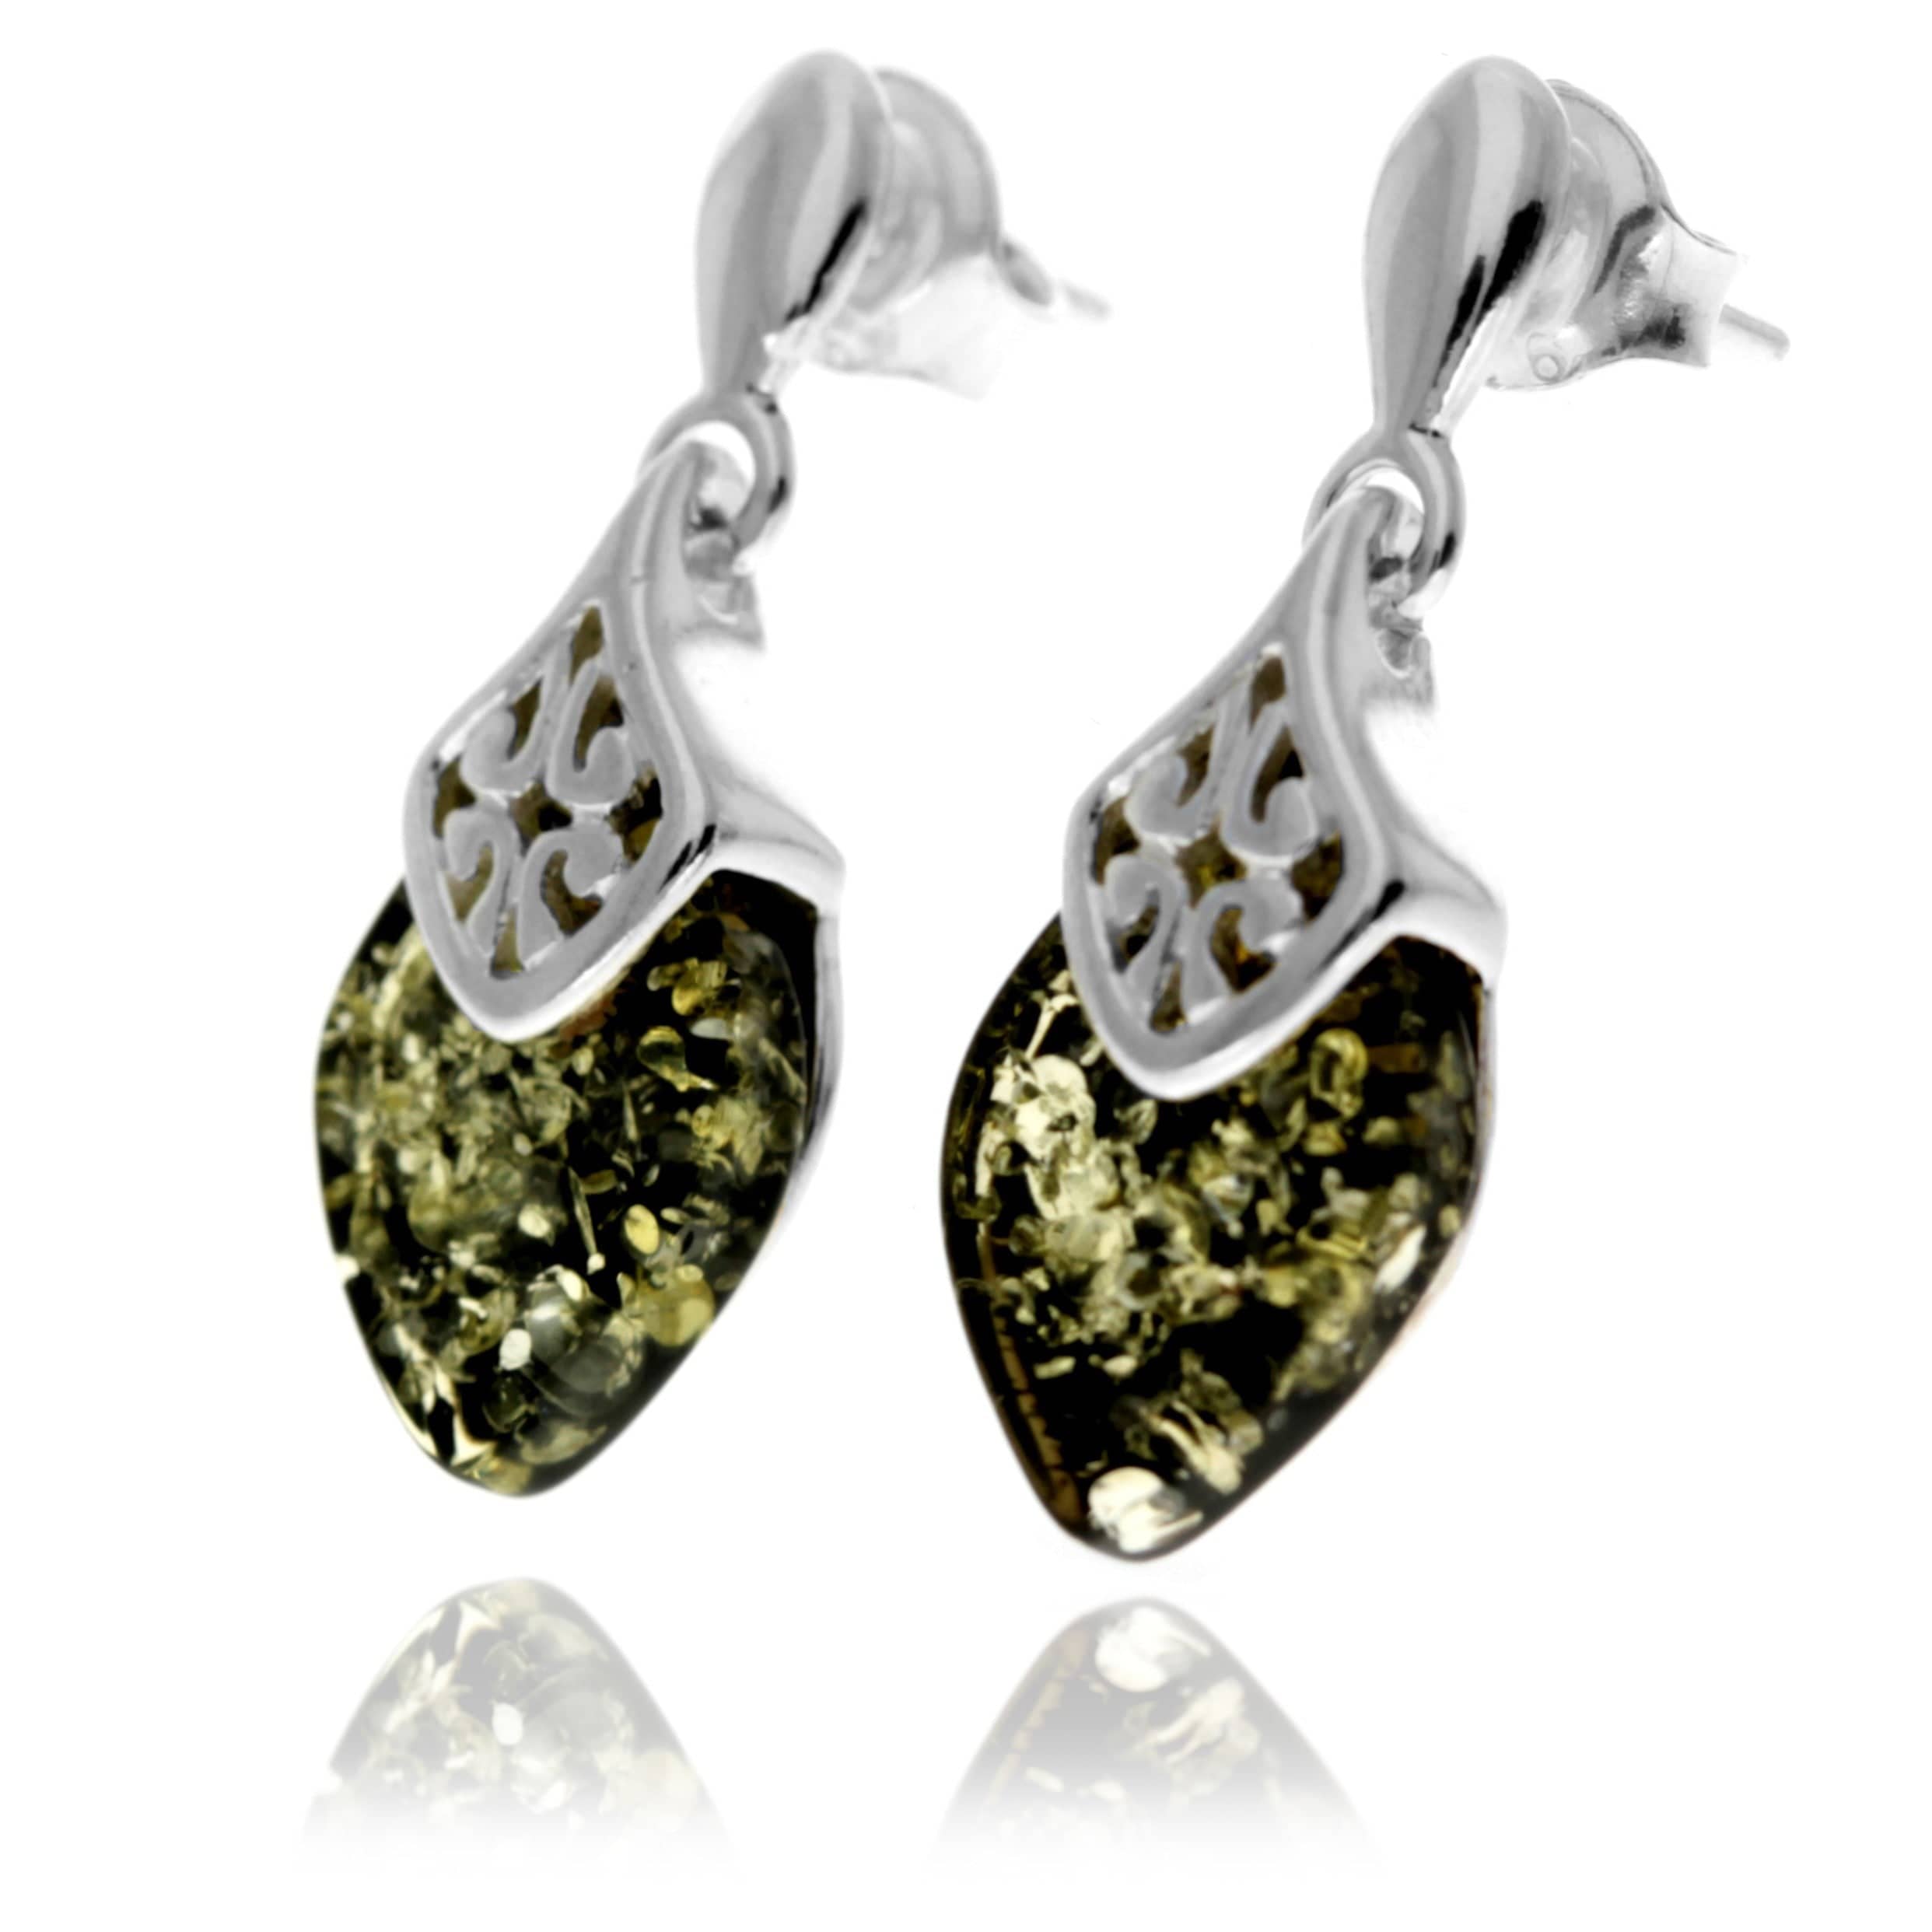 925 Sterling Silver & Genuine Baltic Amber Marquise Modern Drop Earrings - GL1017D